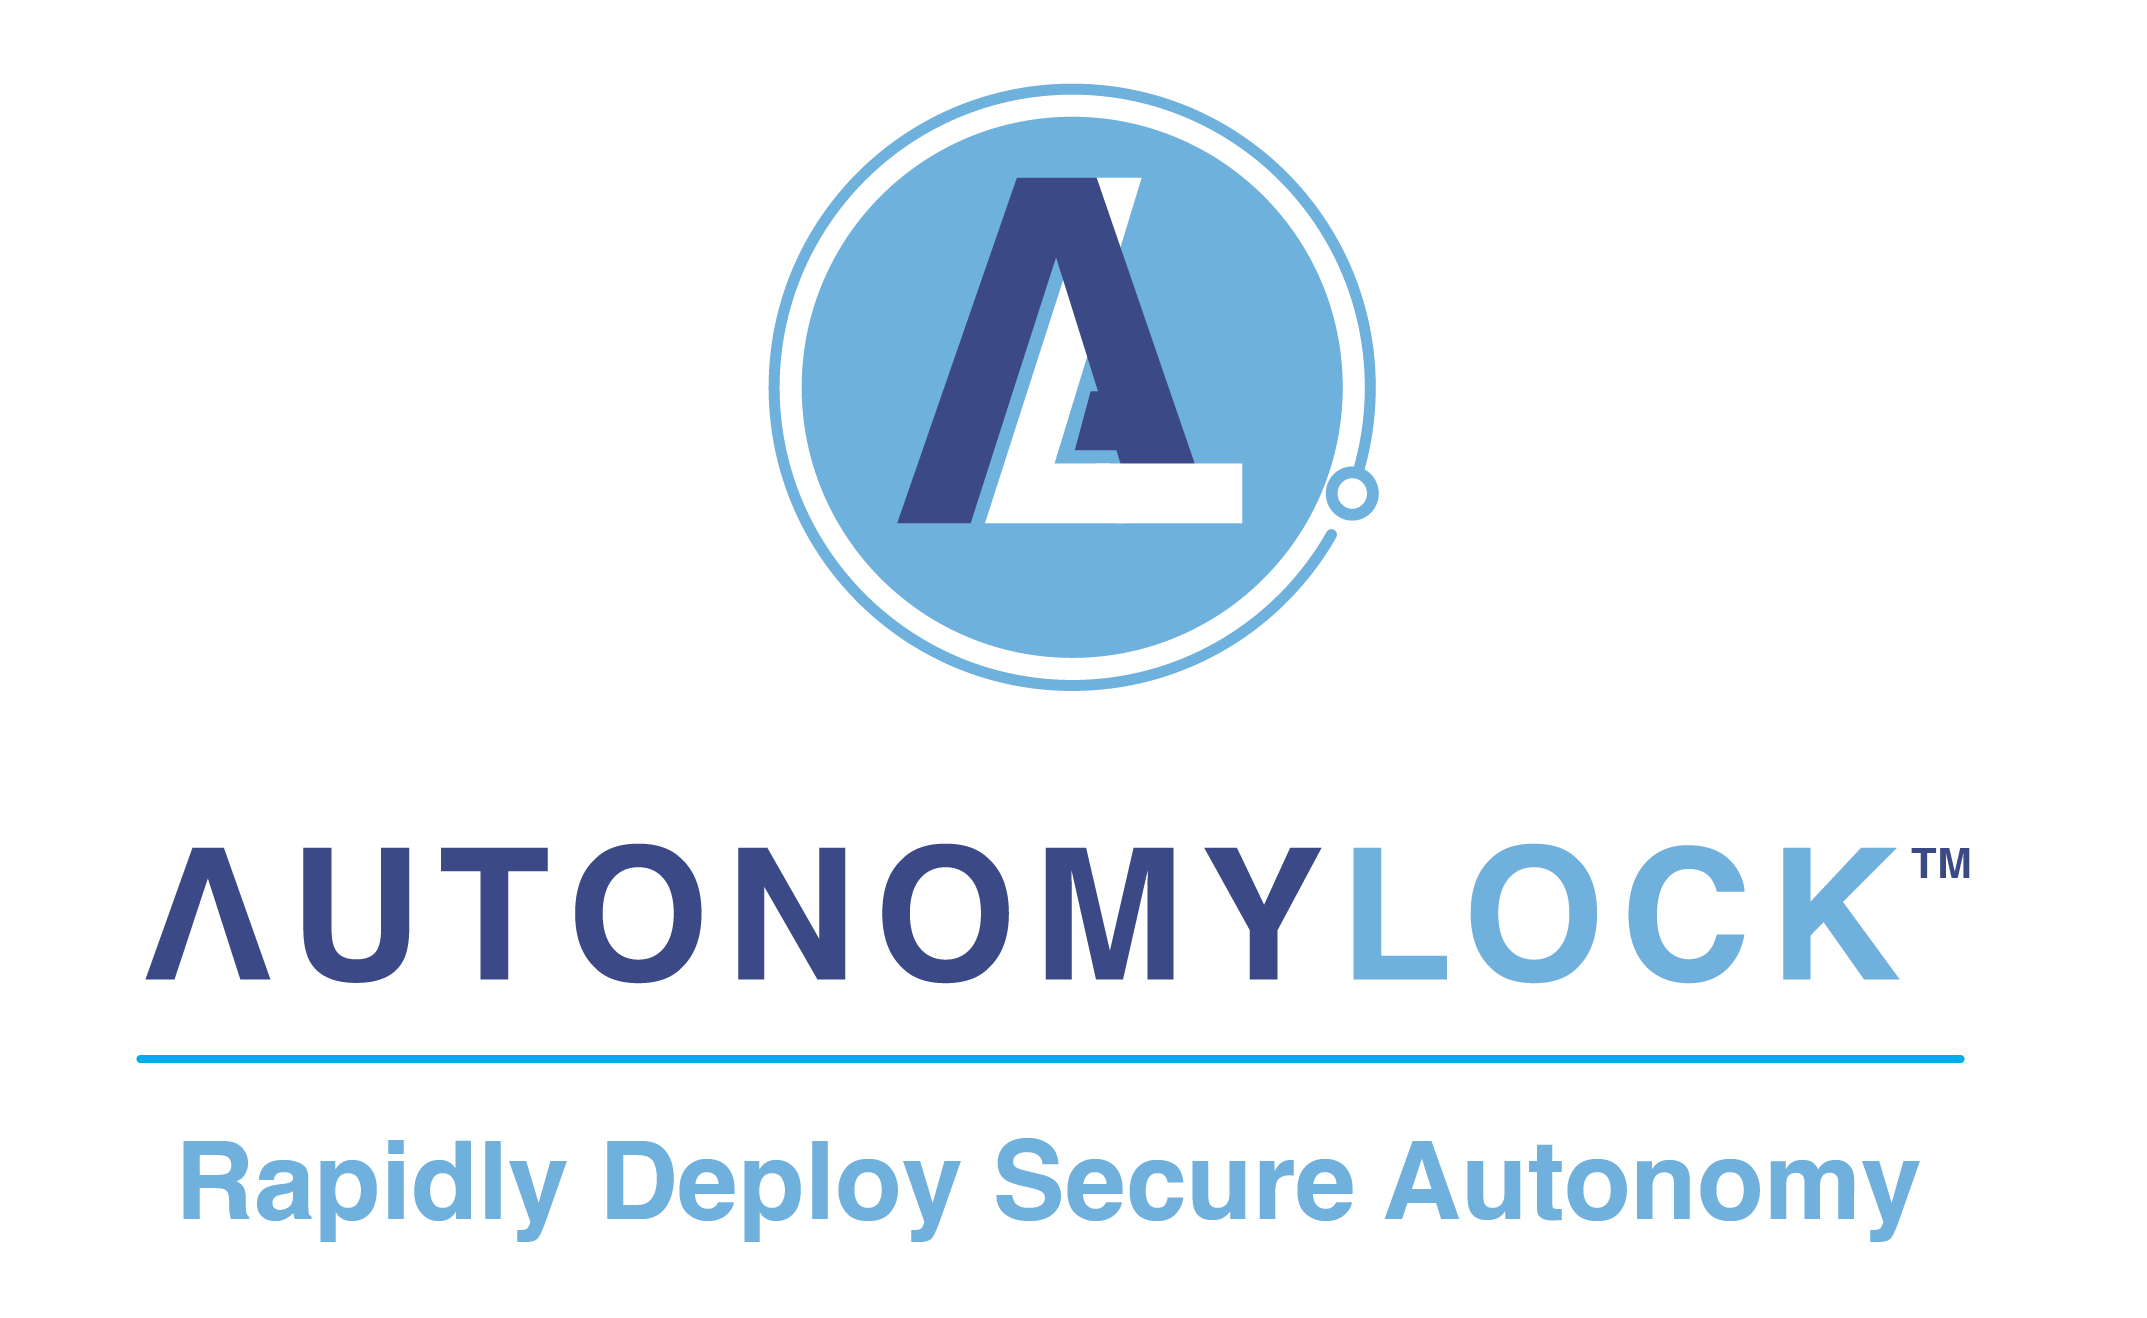 Autonomy Cntrd Logo 1 crop